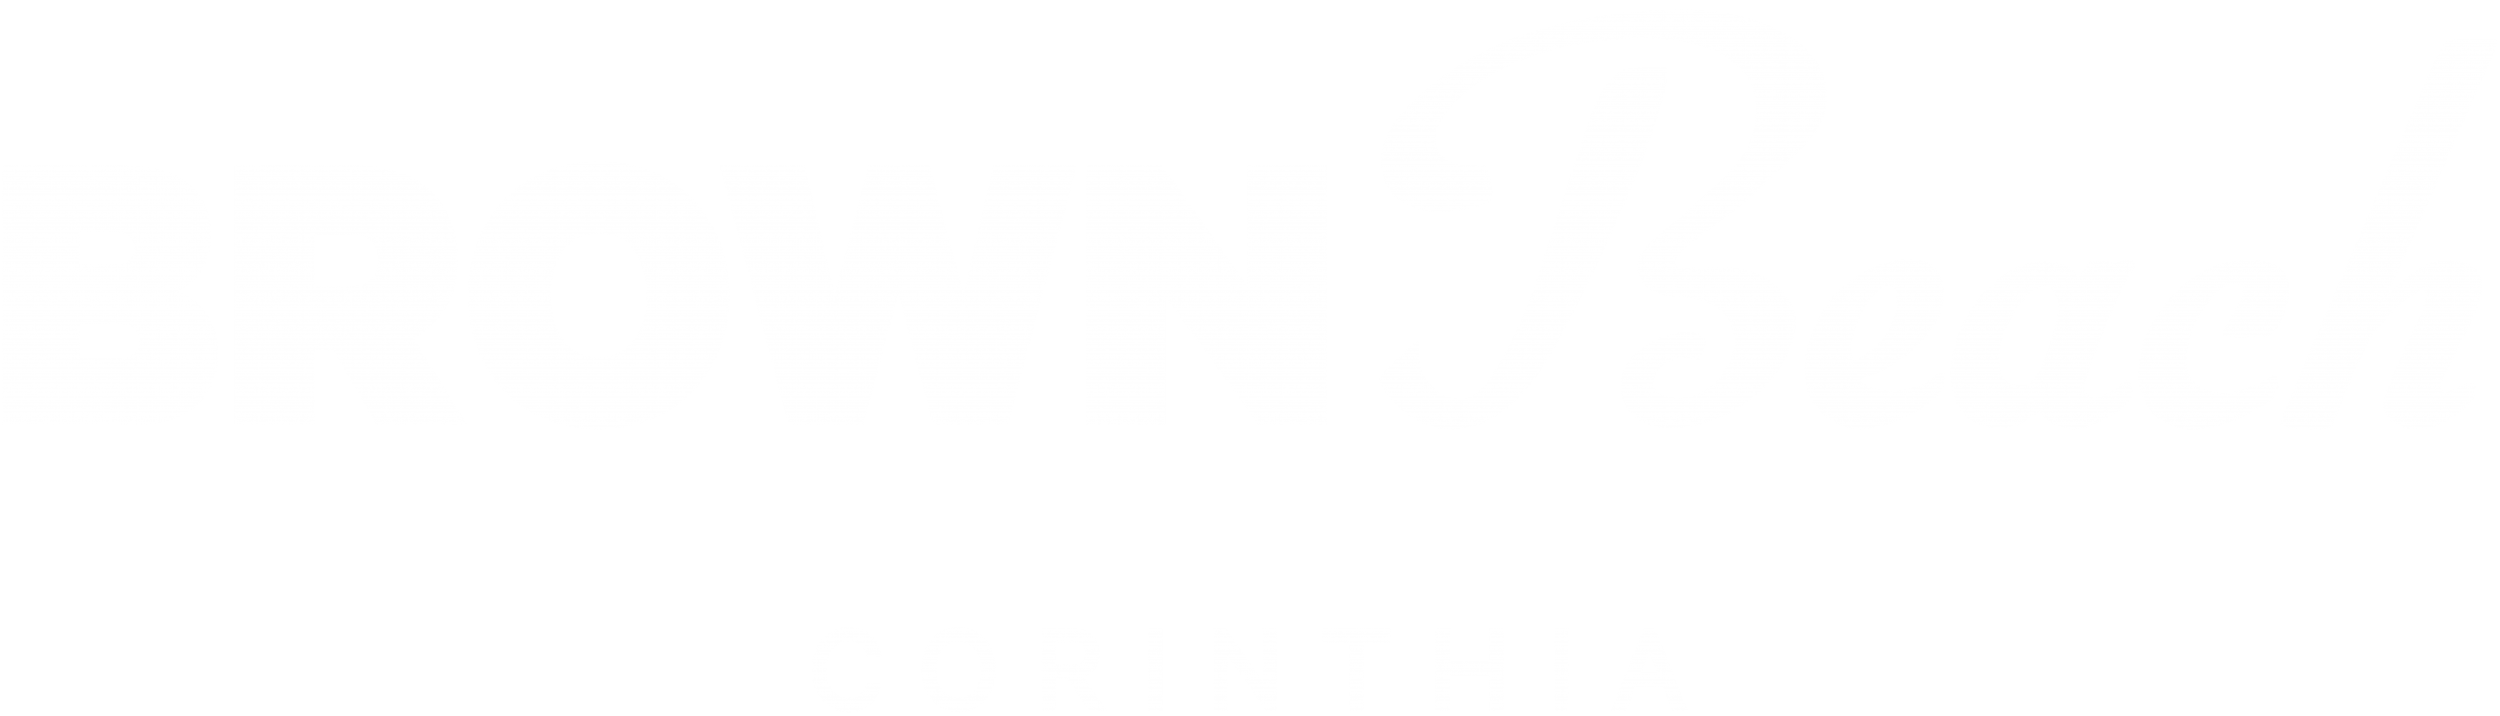 beach_corinthia hotel logo